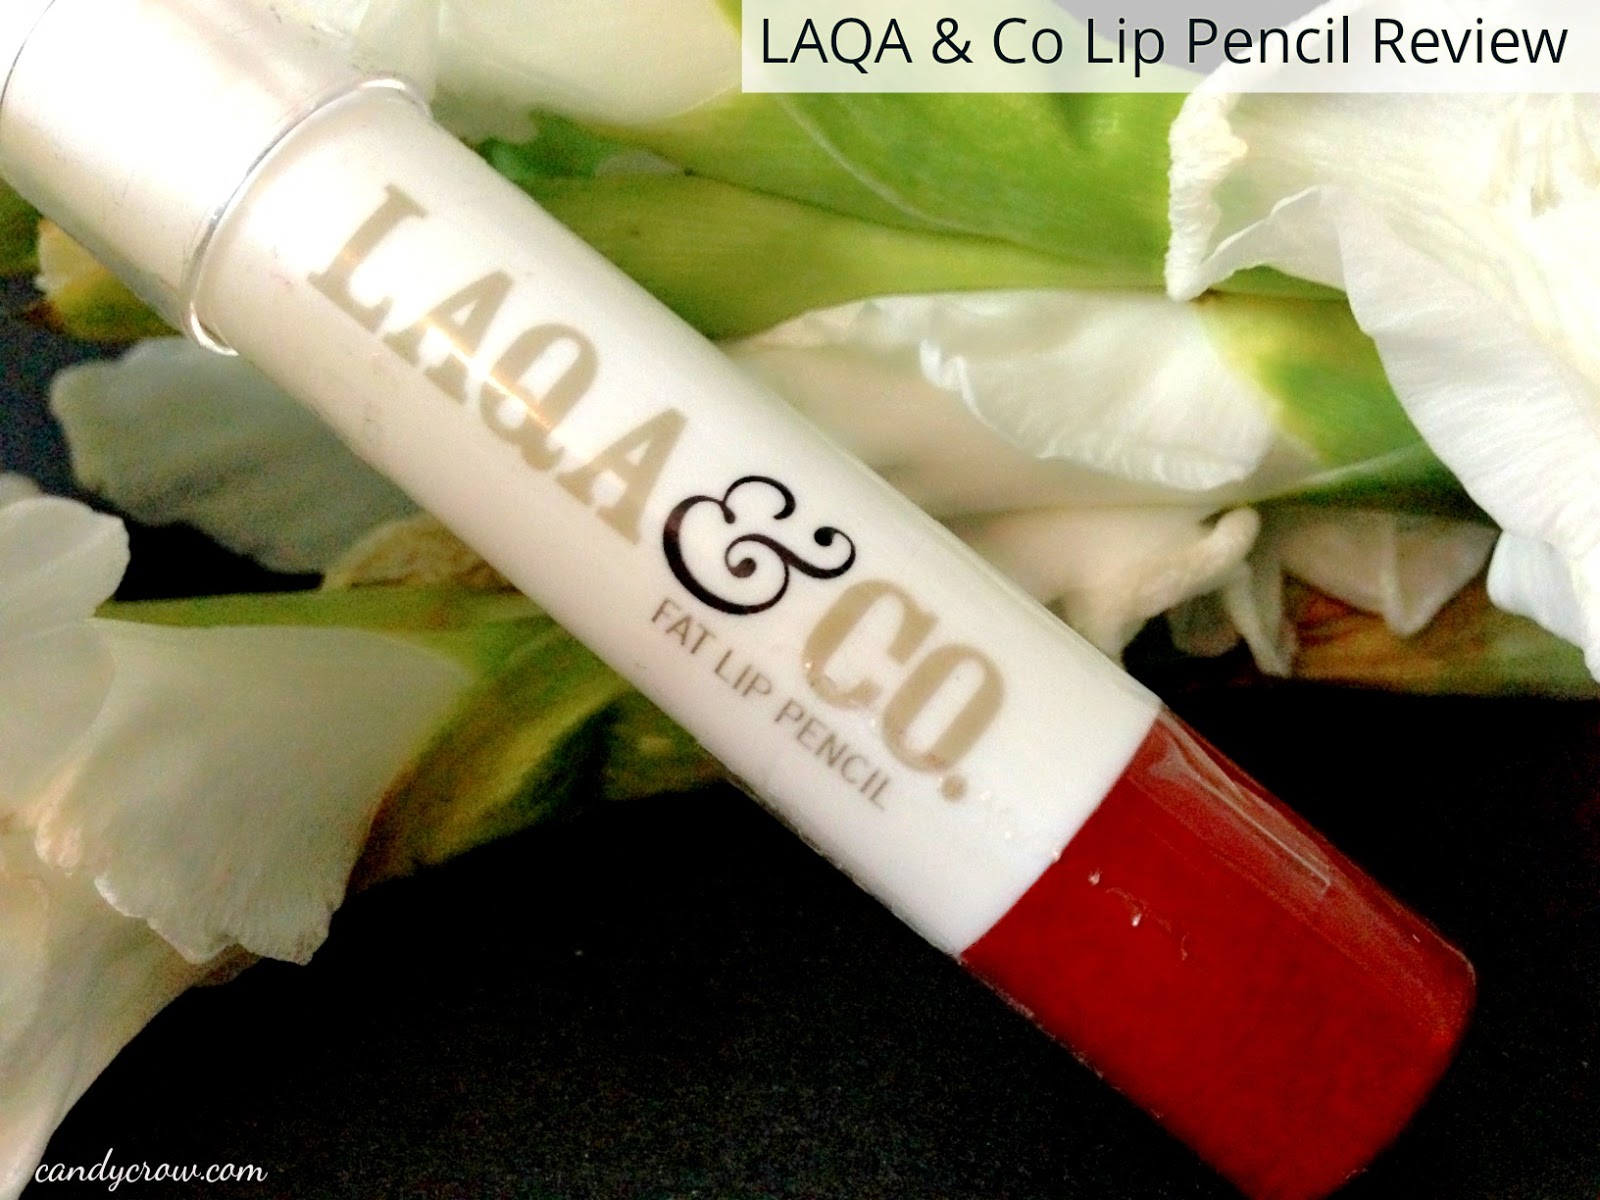 LAQA & Co Fat Lip Pencil - Siren Song Review